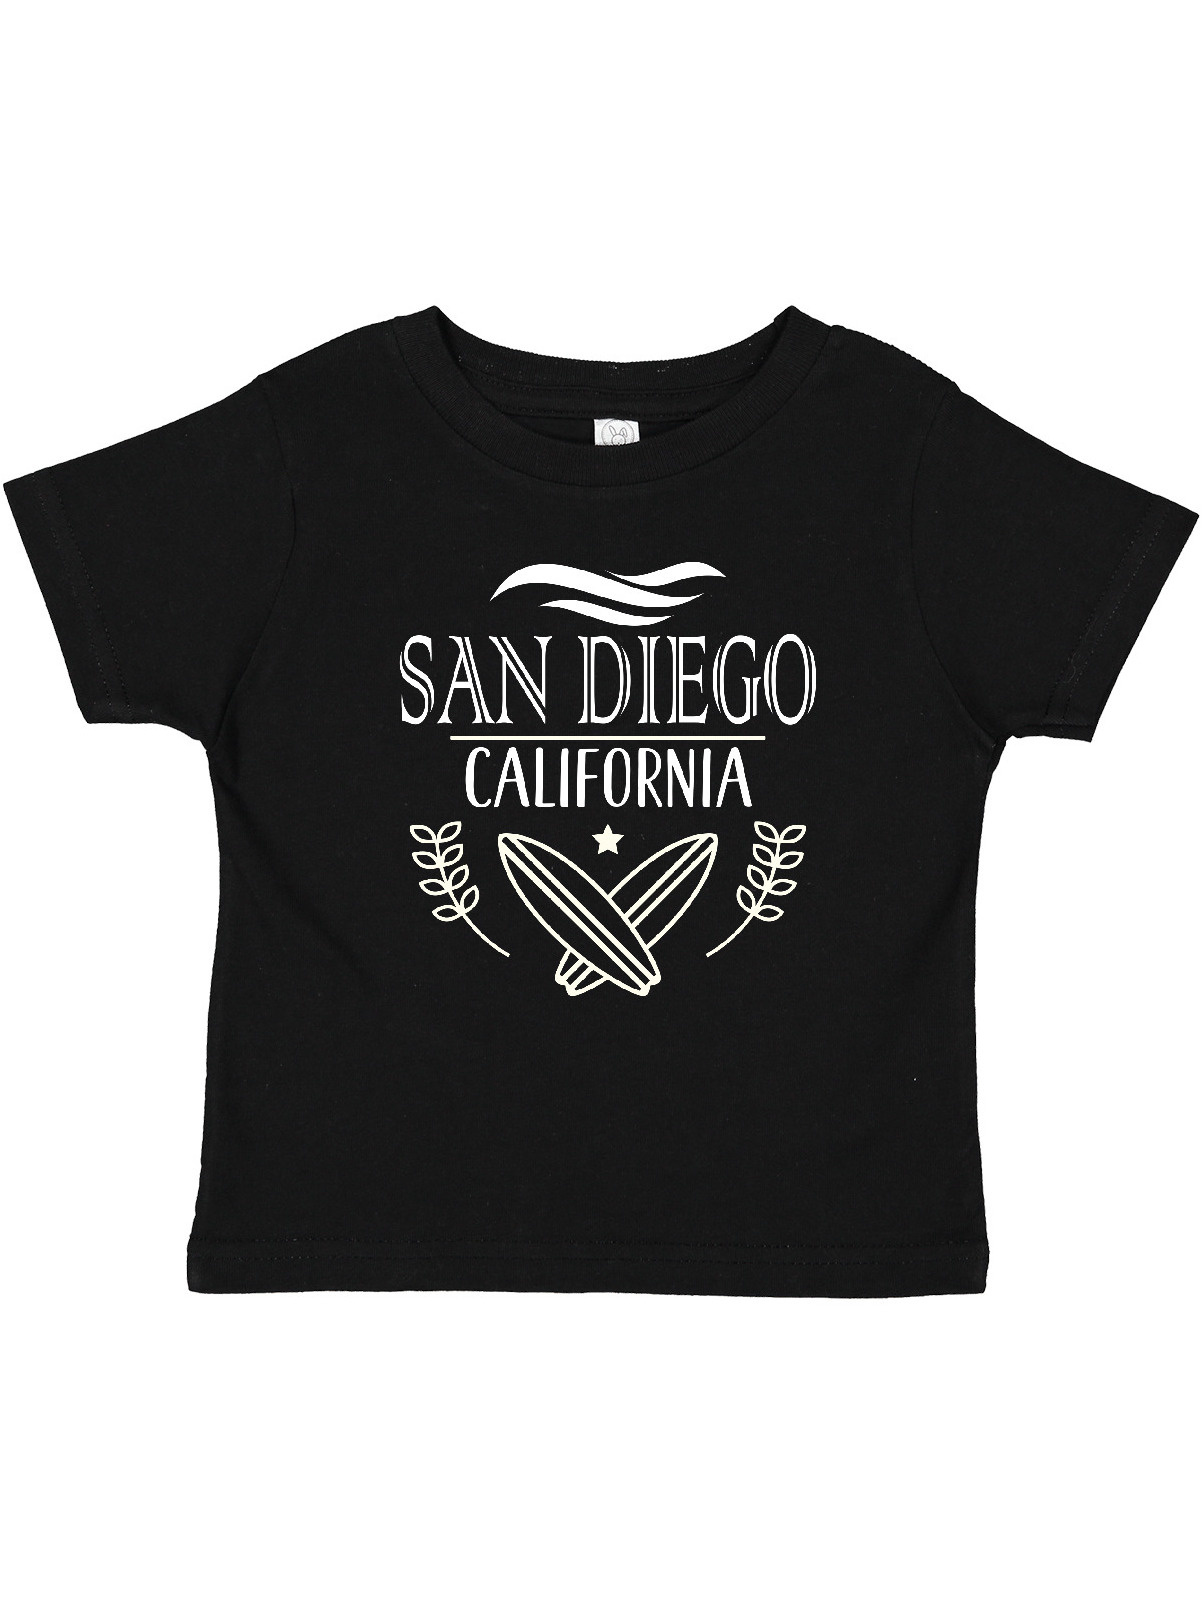 New Boys 8-10 Surfboard San Diego T-Shirt - baby & kid stuff - by owner -  household sale - craigslist